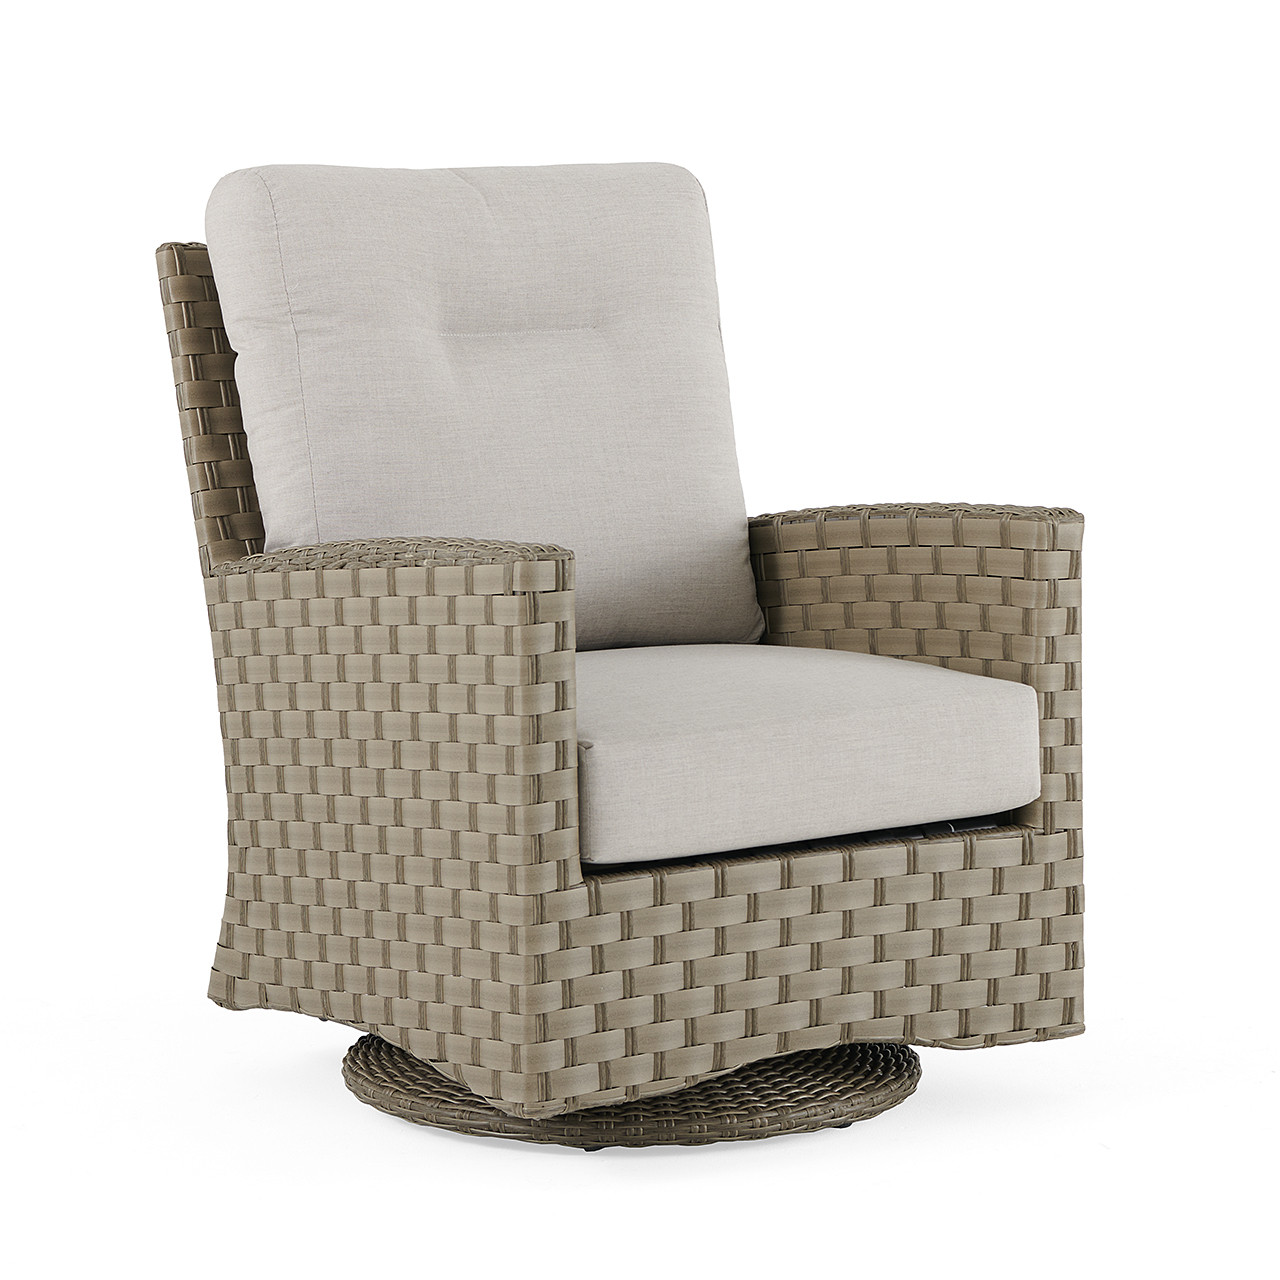 Gramercy Sea Grey Outdoor Wicker with Cushions Swivel Club Chair